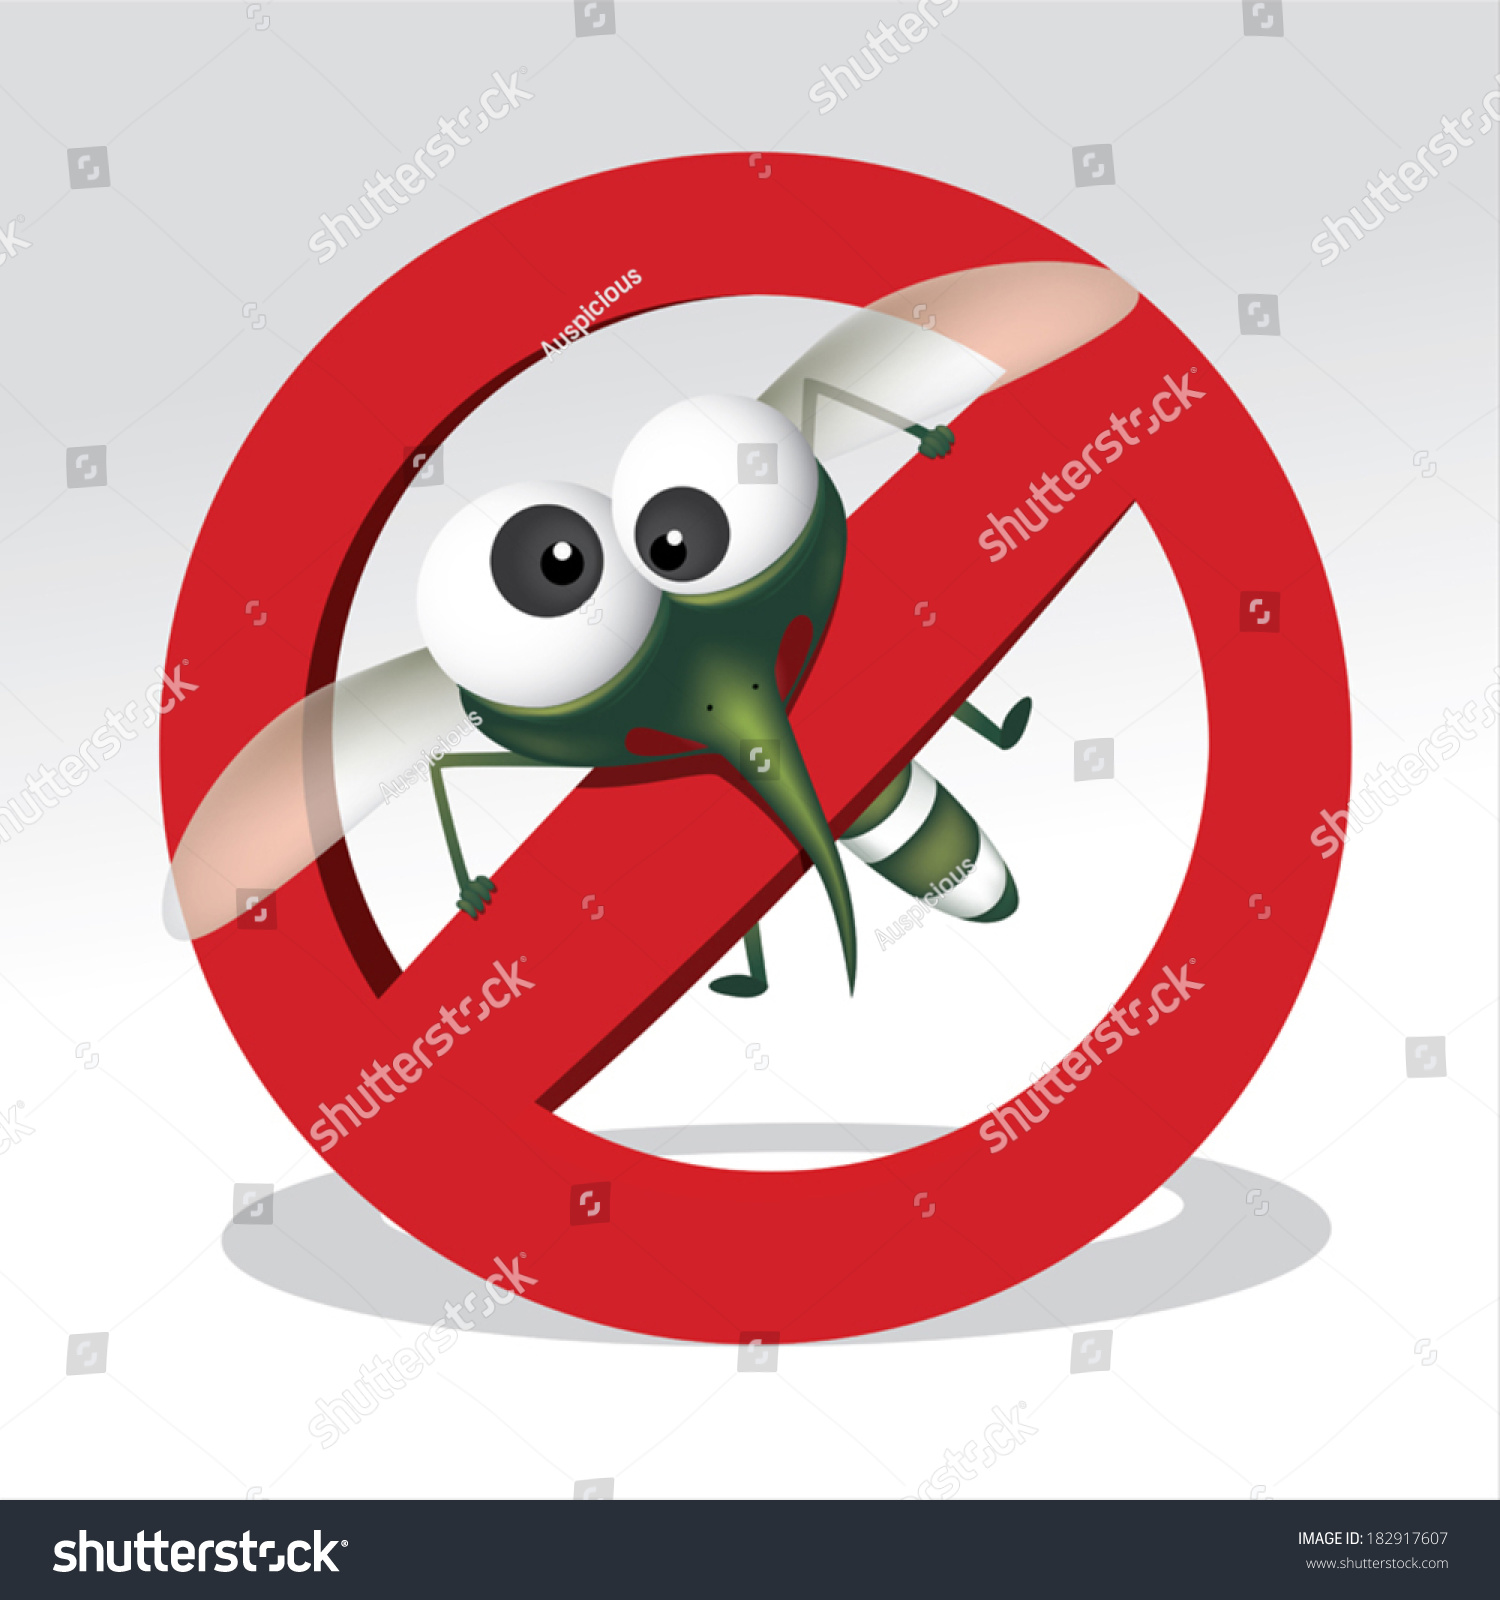 insect repellent clip art - photo #25